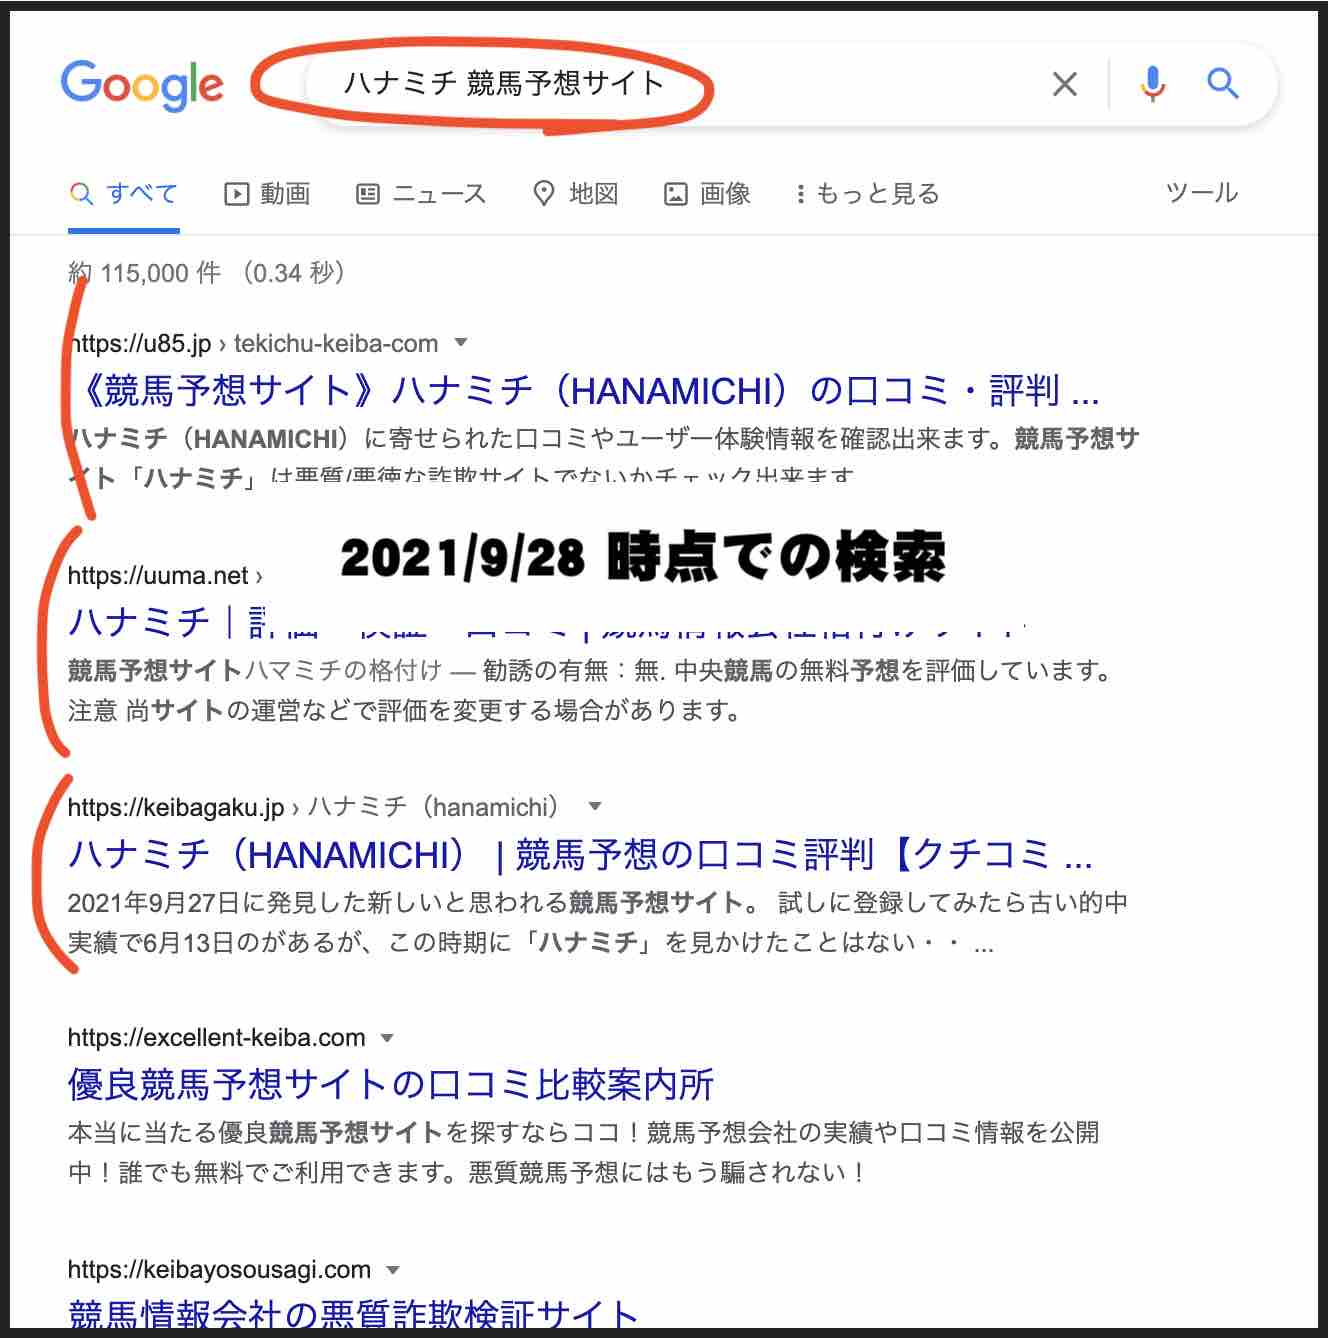 HANAMICHI(ハナミチ)という競馬予想サイトの情報検索